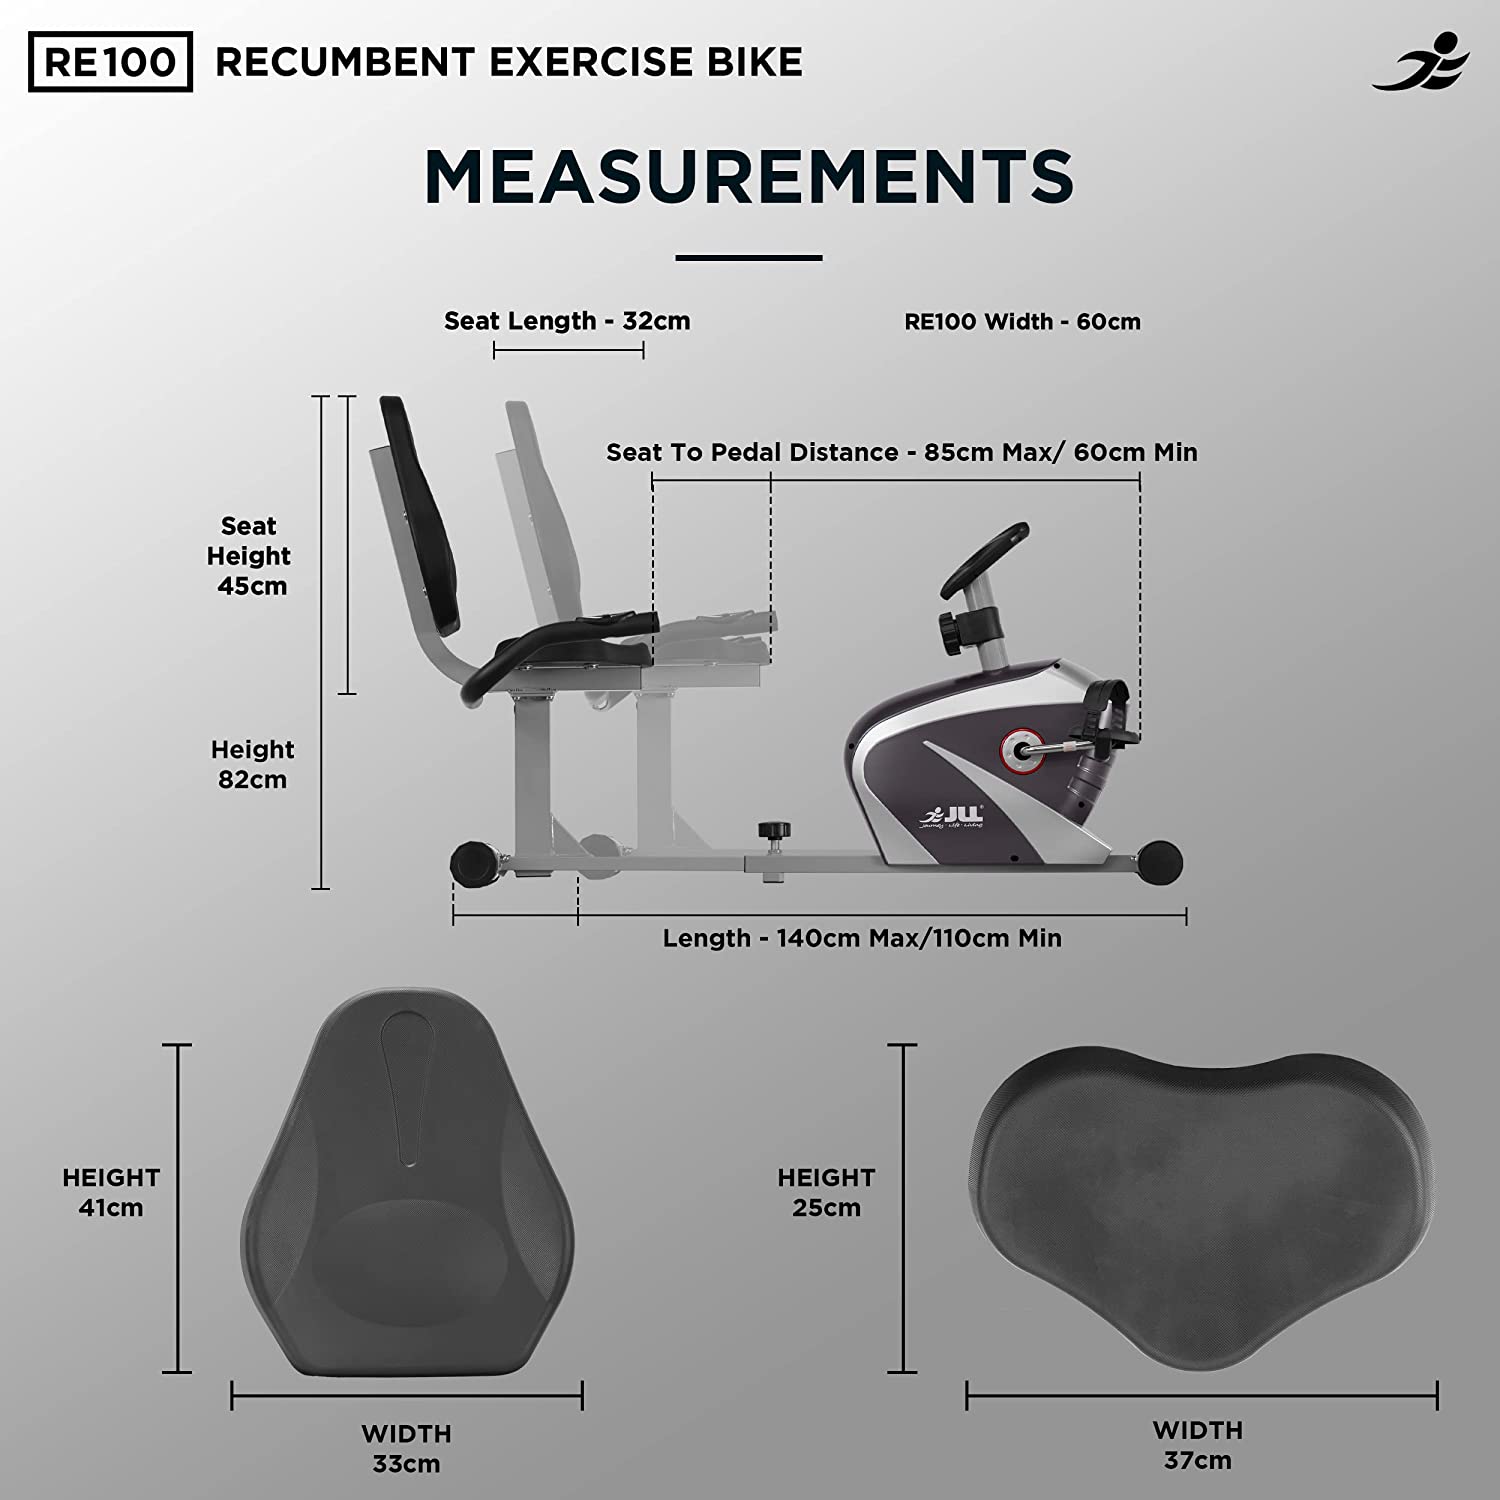 JLL RE100 Recumbent Home Exercise Bike Measurements